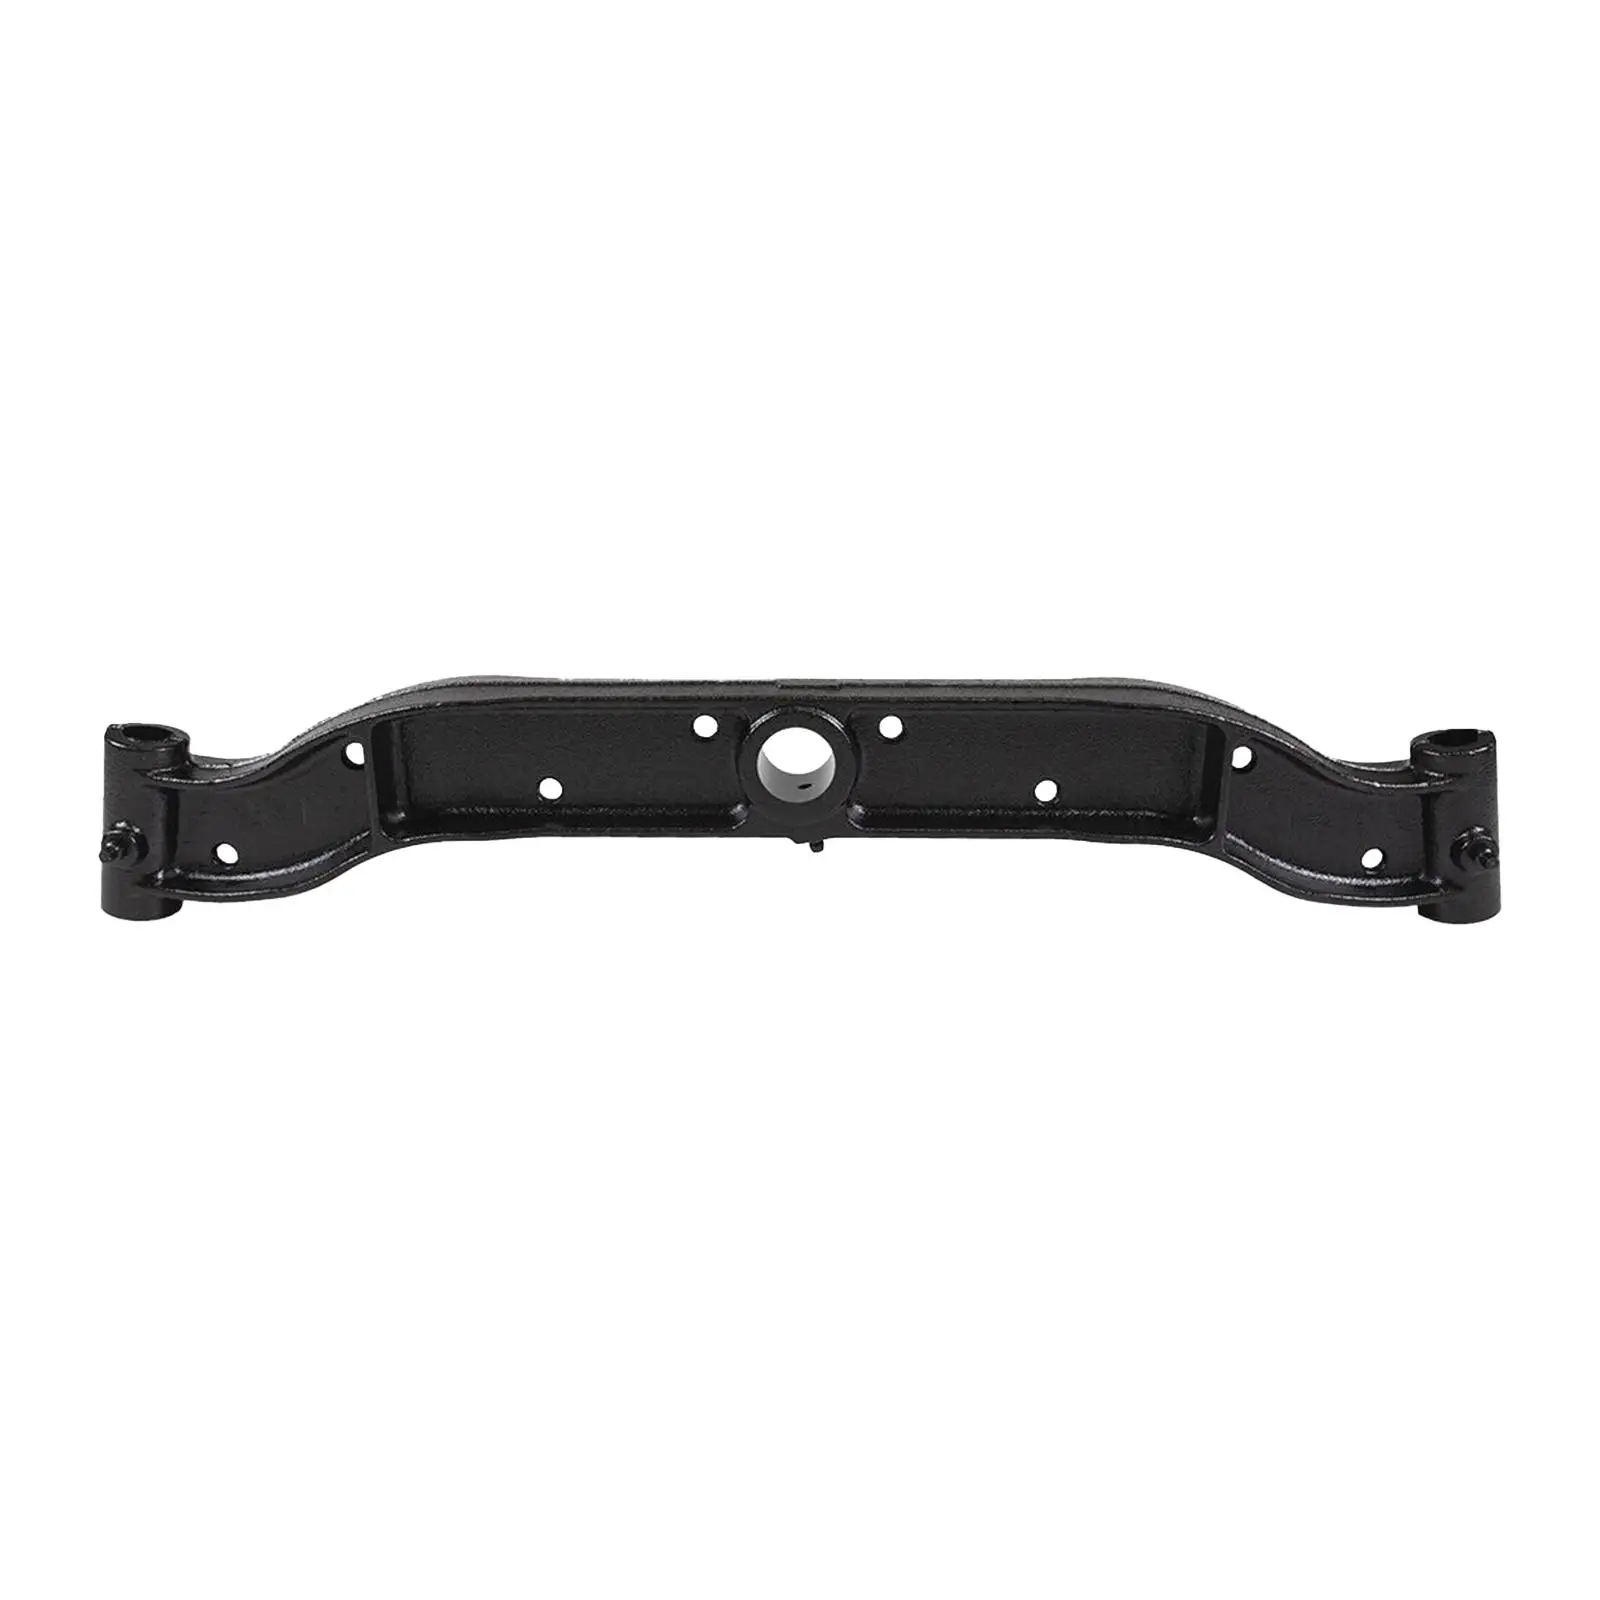 

Front Axle Pivot Bar Accessories for Riding Lawn Mowers L118 L120 L130 G110 L100 L105 L107 Stable Performance